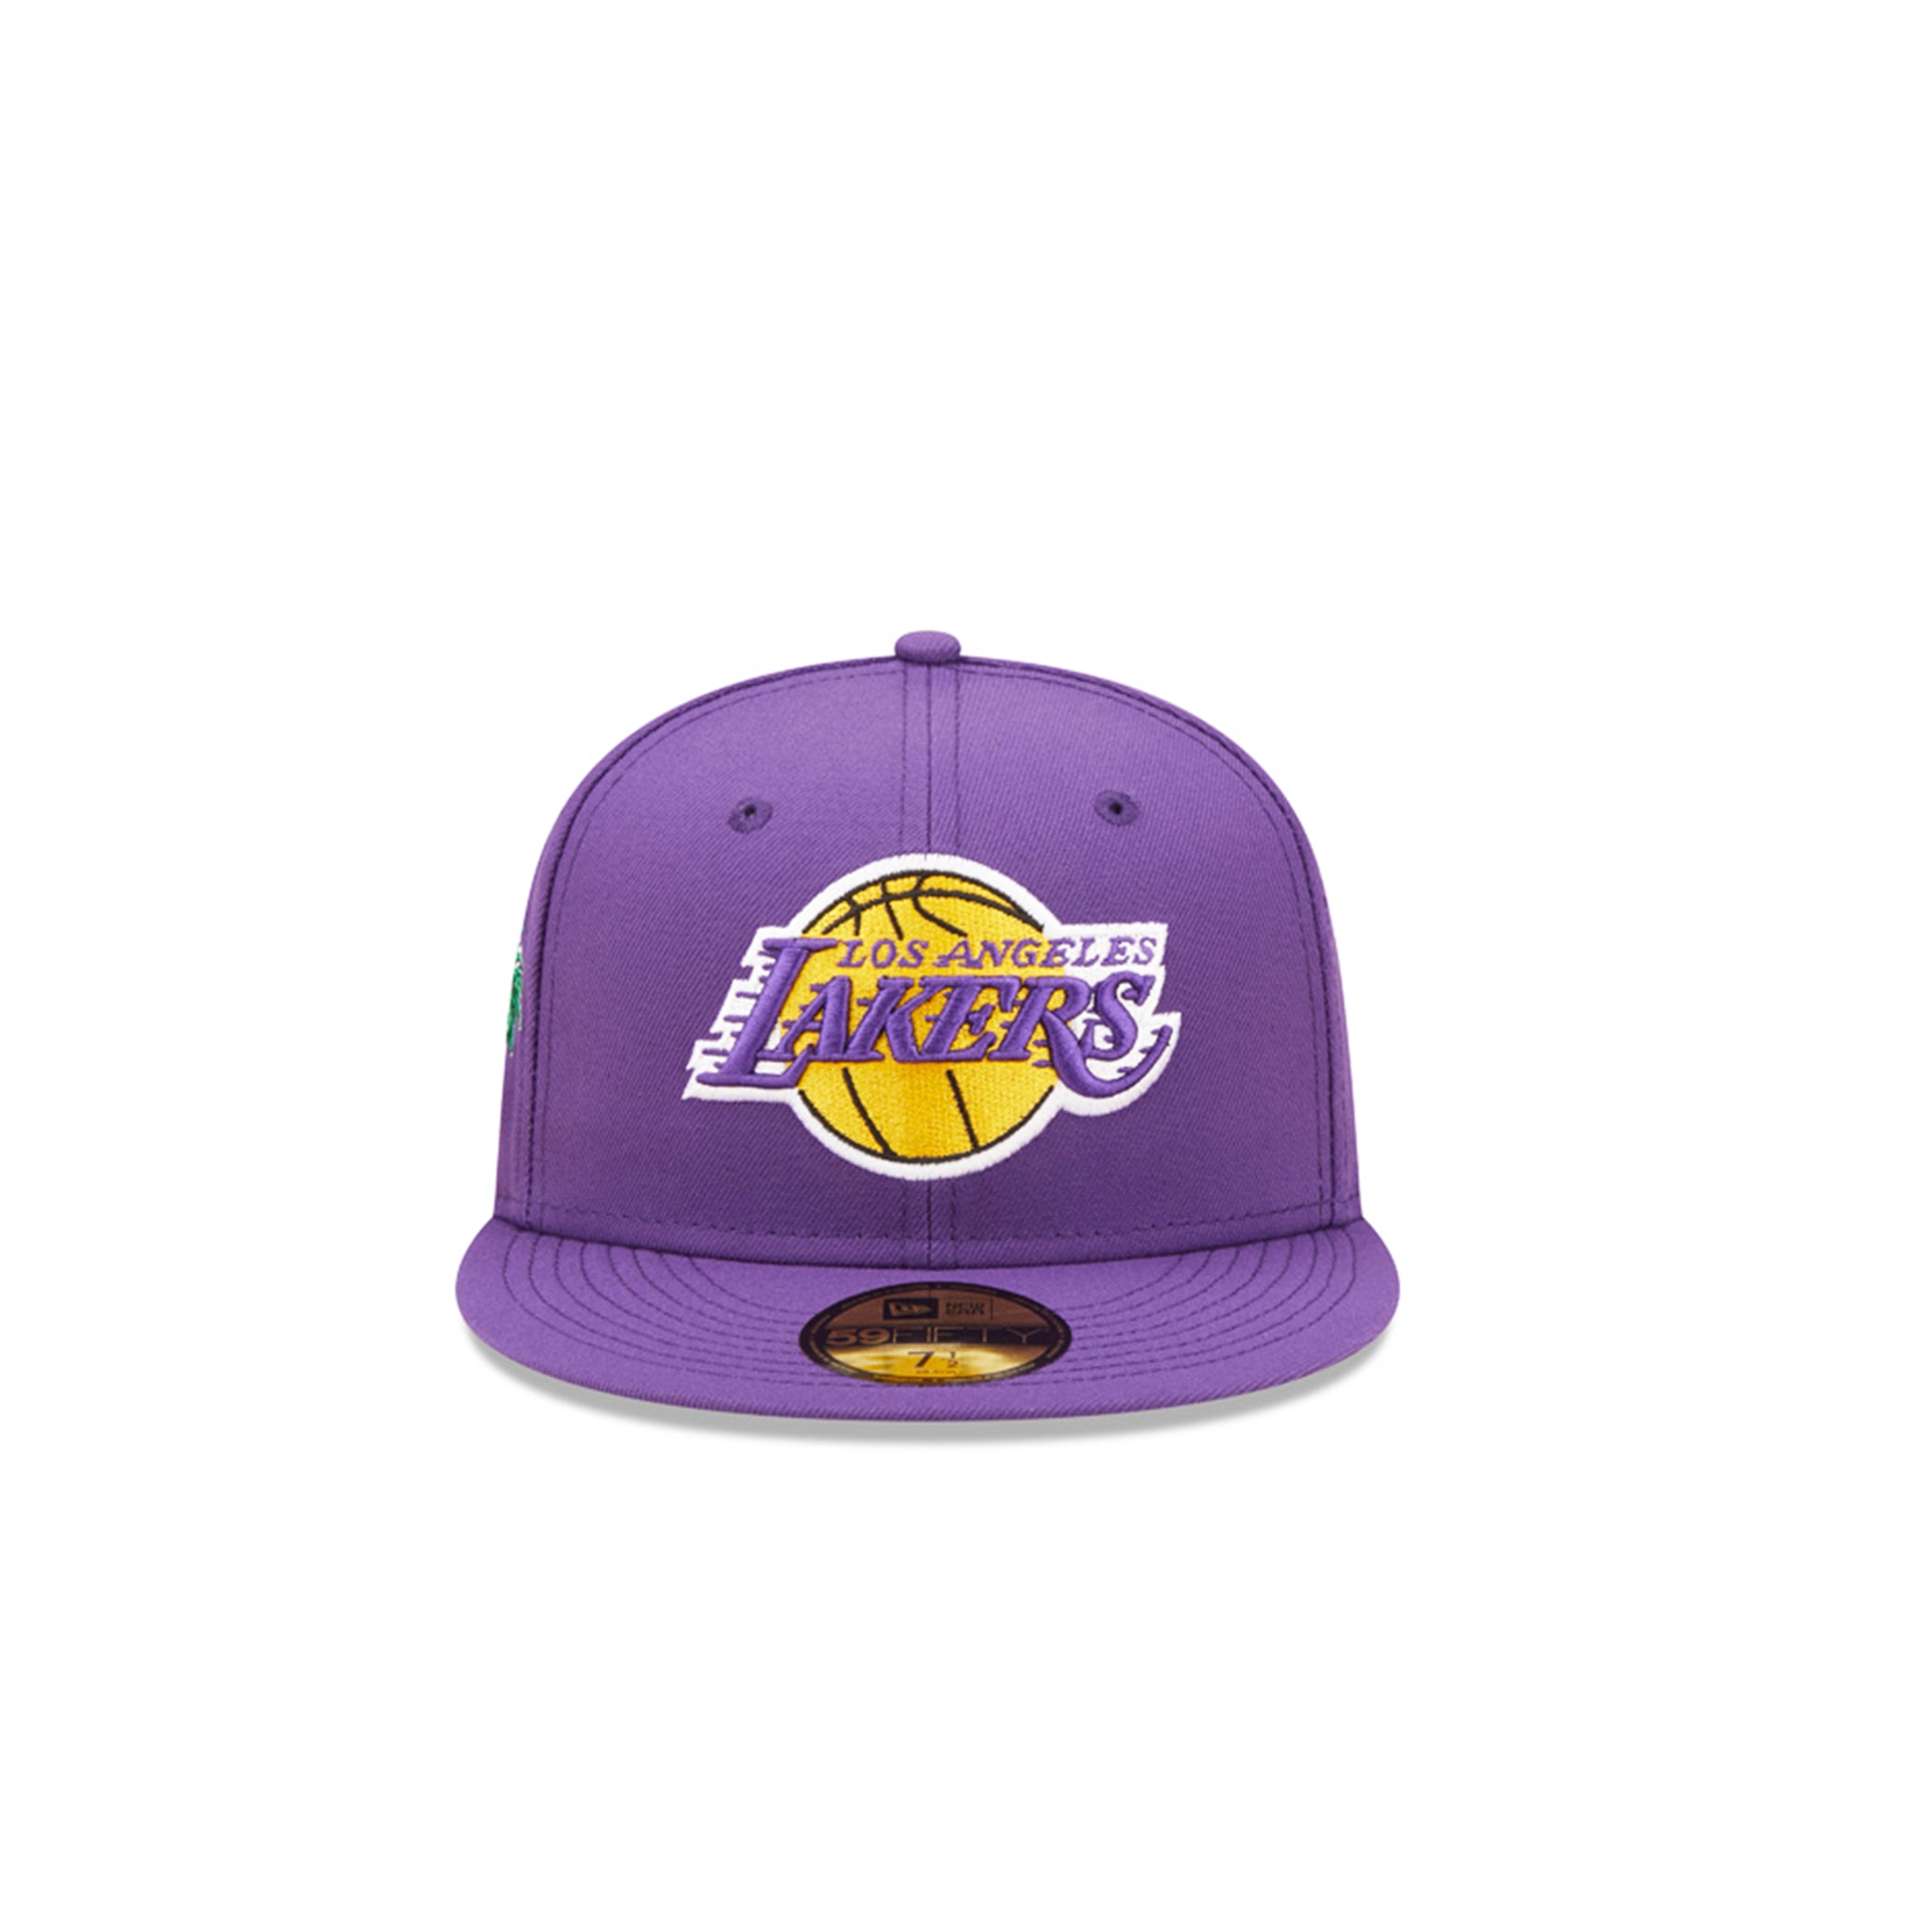 Adidas LA Lakers Purple Gold Vintage Hat Fitted L/XL Climate